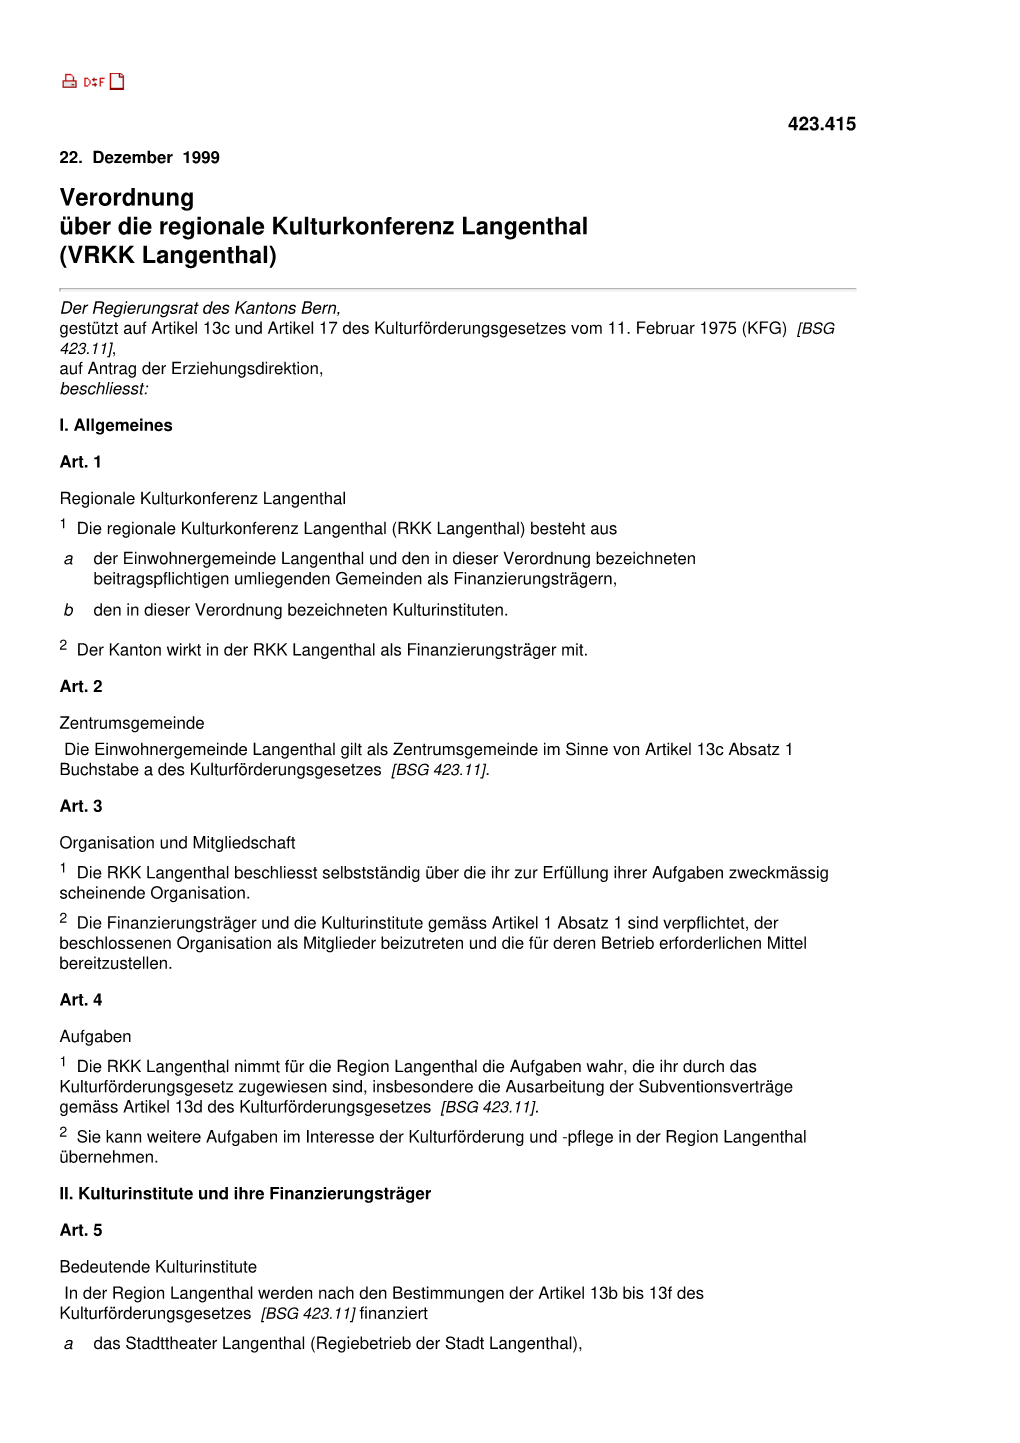 Verordnung Über Die Regionale Kulturkonferenz Langenthal (VRKK Langenthal)